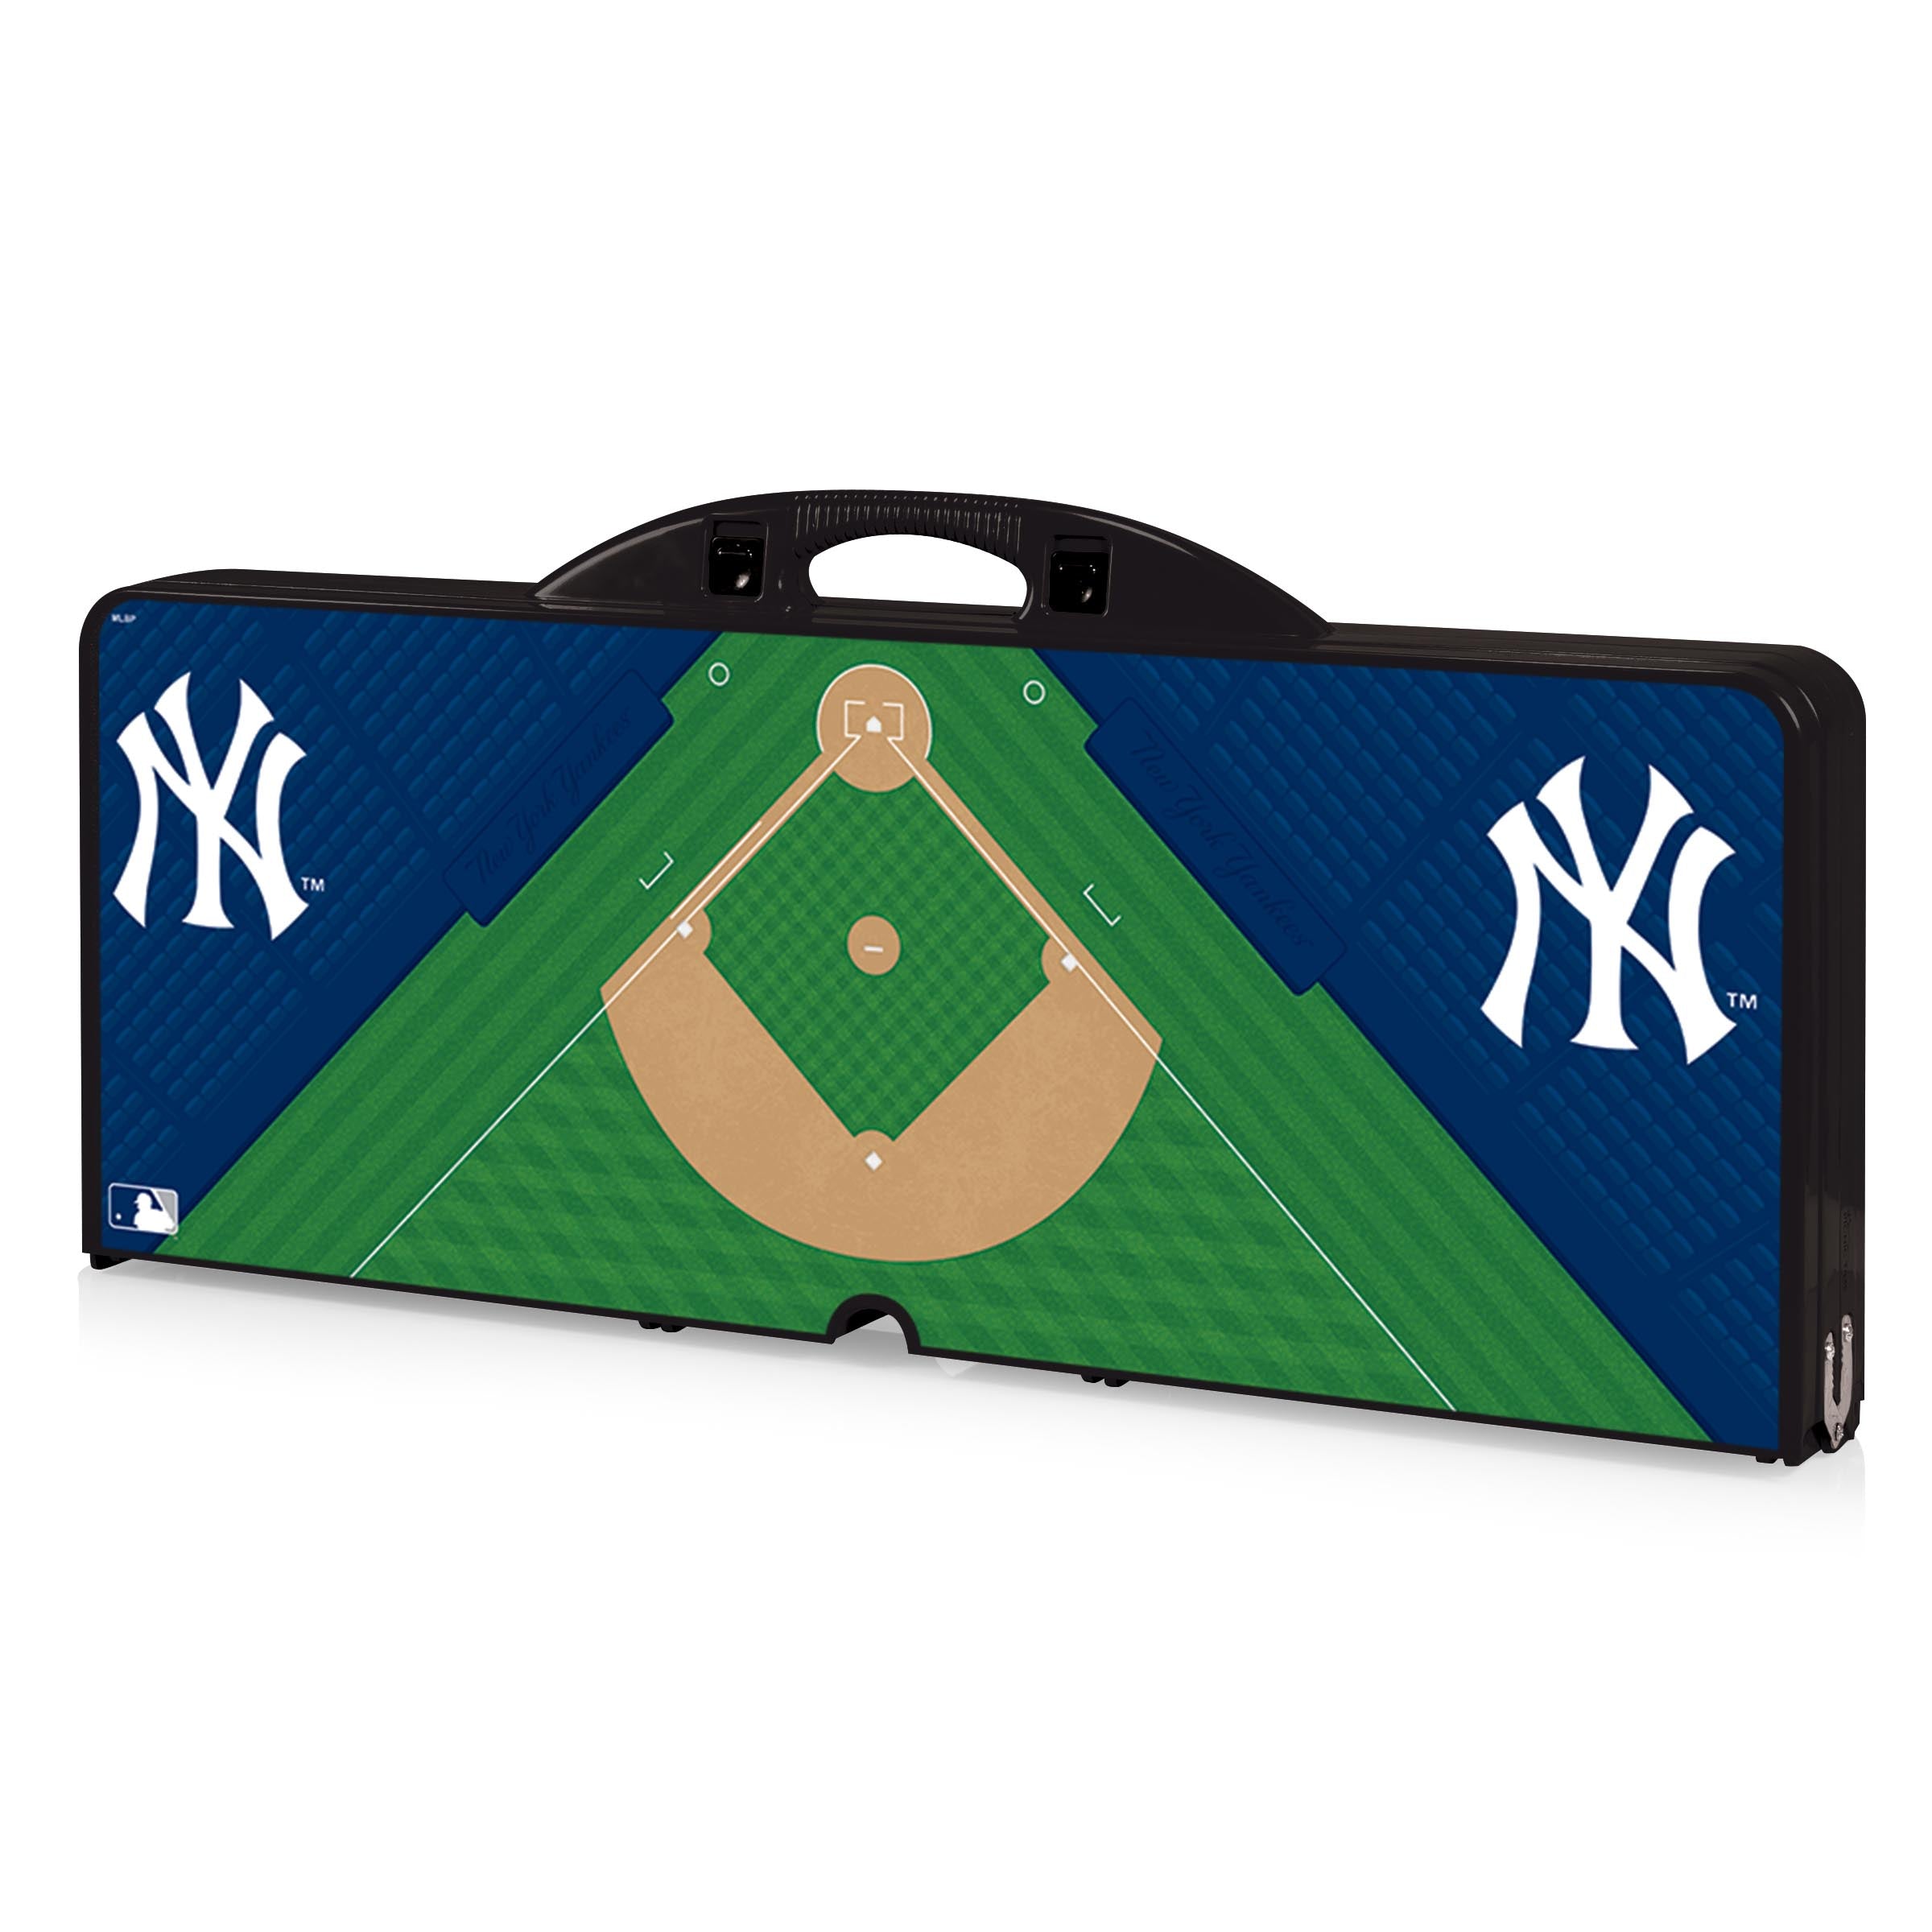 New York Yankees Baseball Diamond - Picnic Table Portable Folding Table with Seats